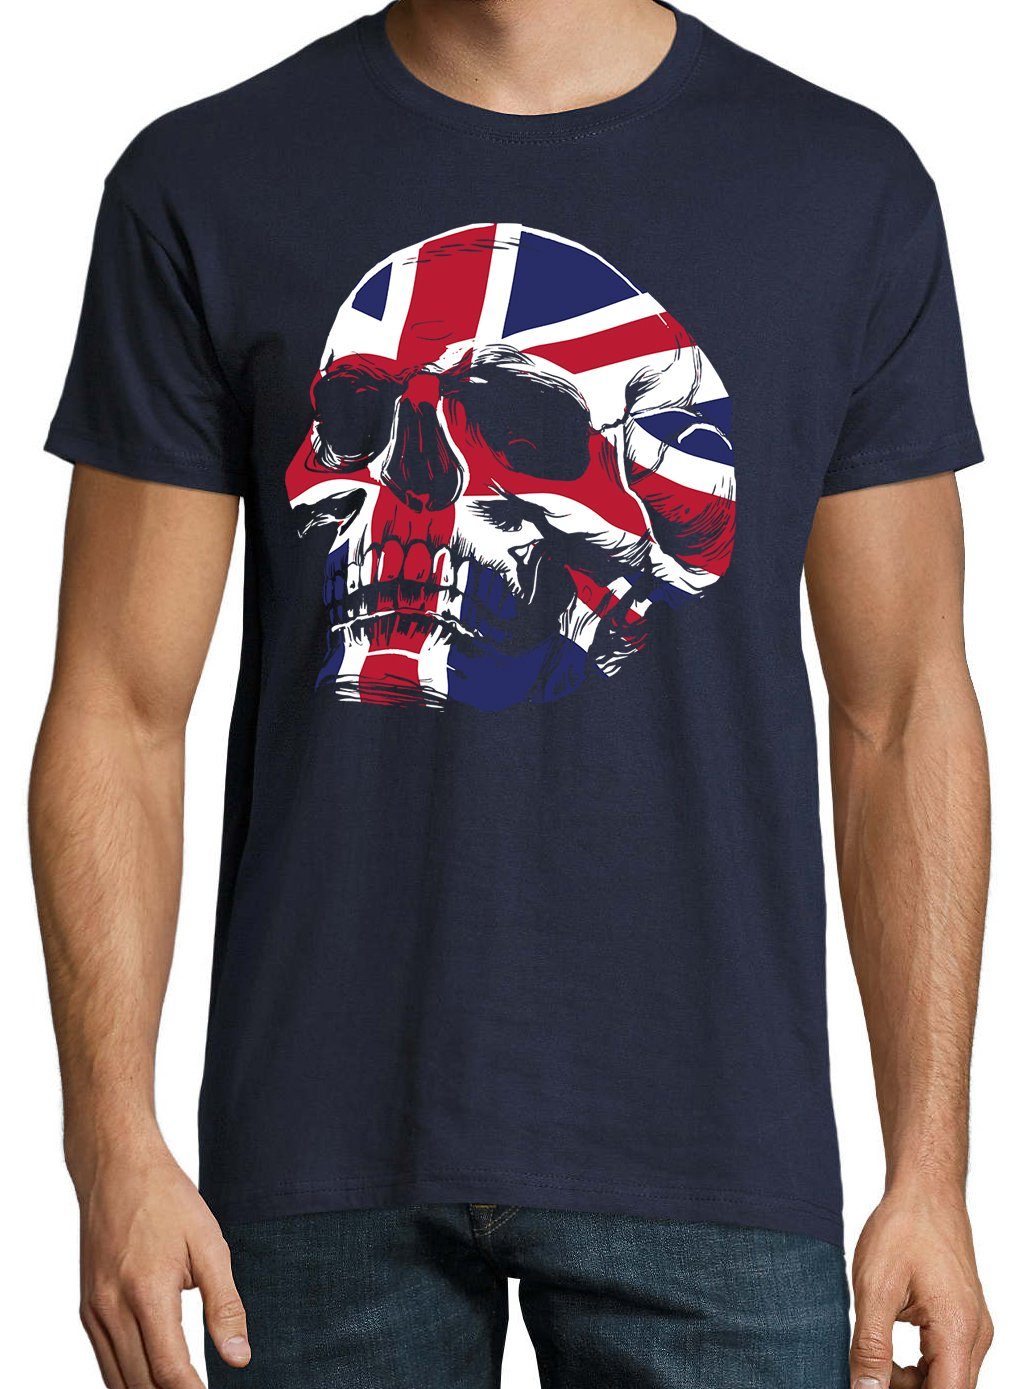 Youth Designz T-Shirt UK England Shirt trendigem Herren Totenkopf Logo Frontprint mit Schädel Navyblau